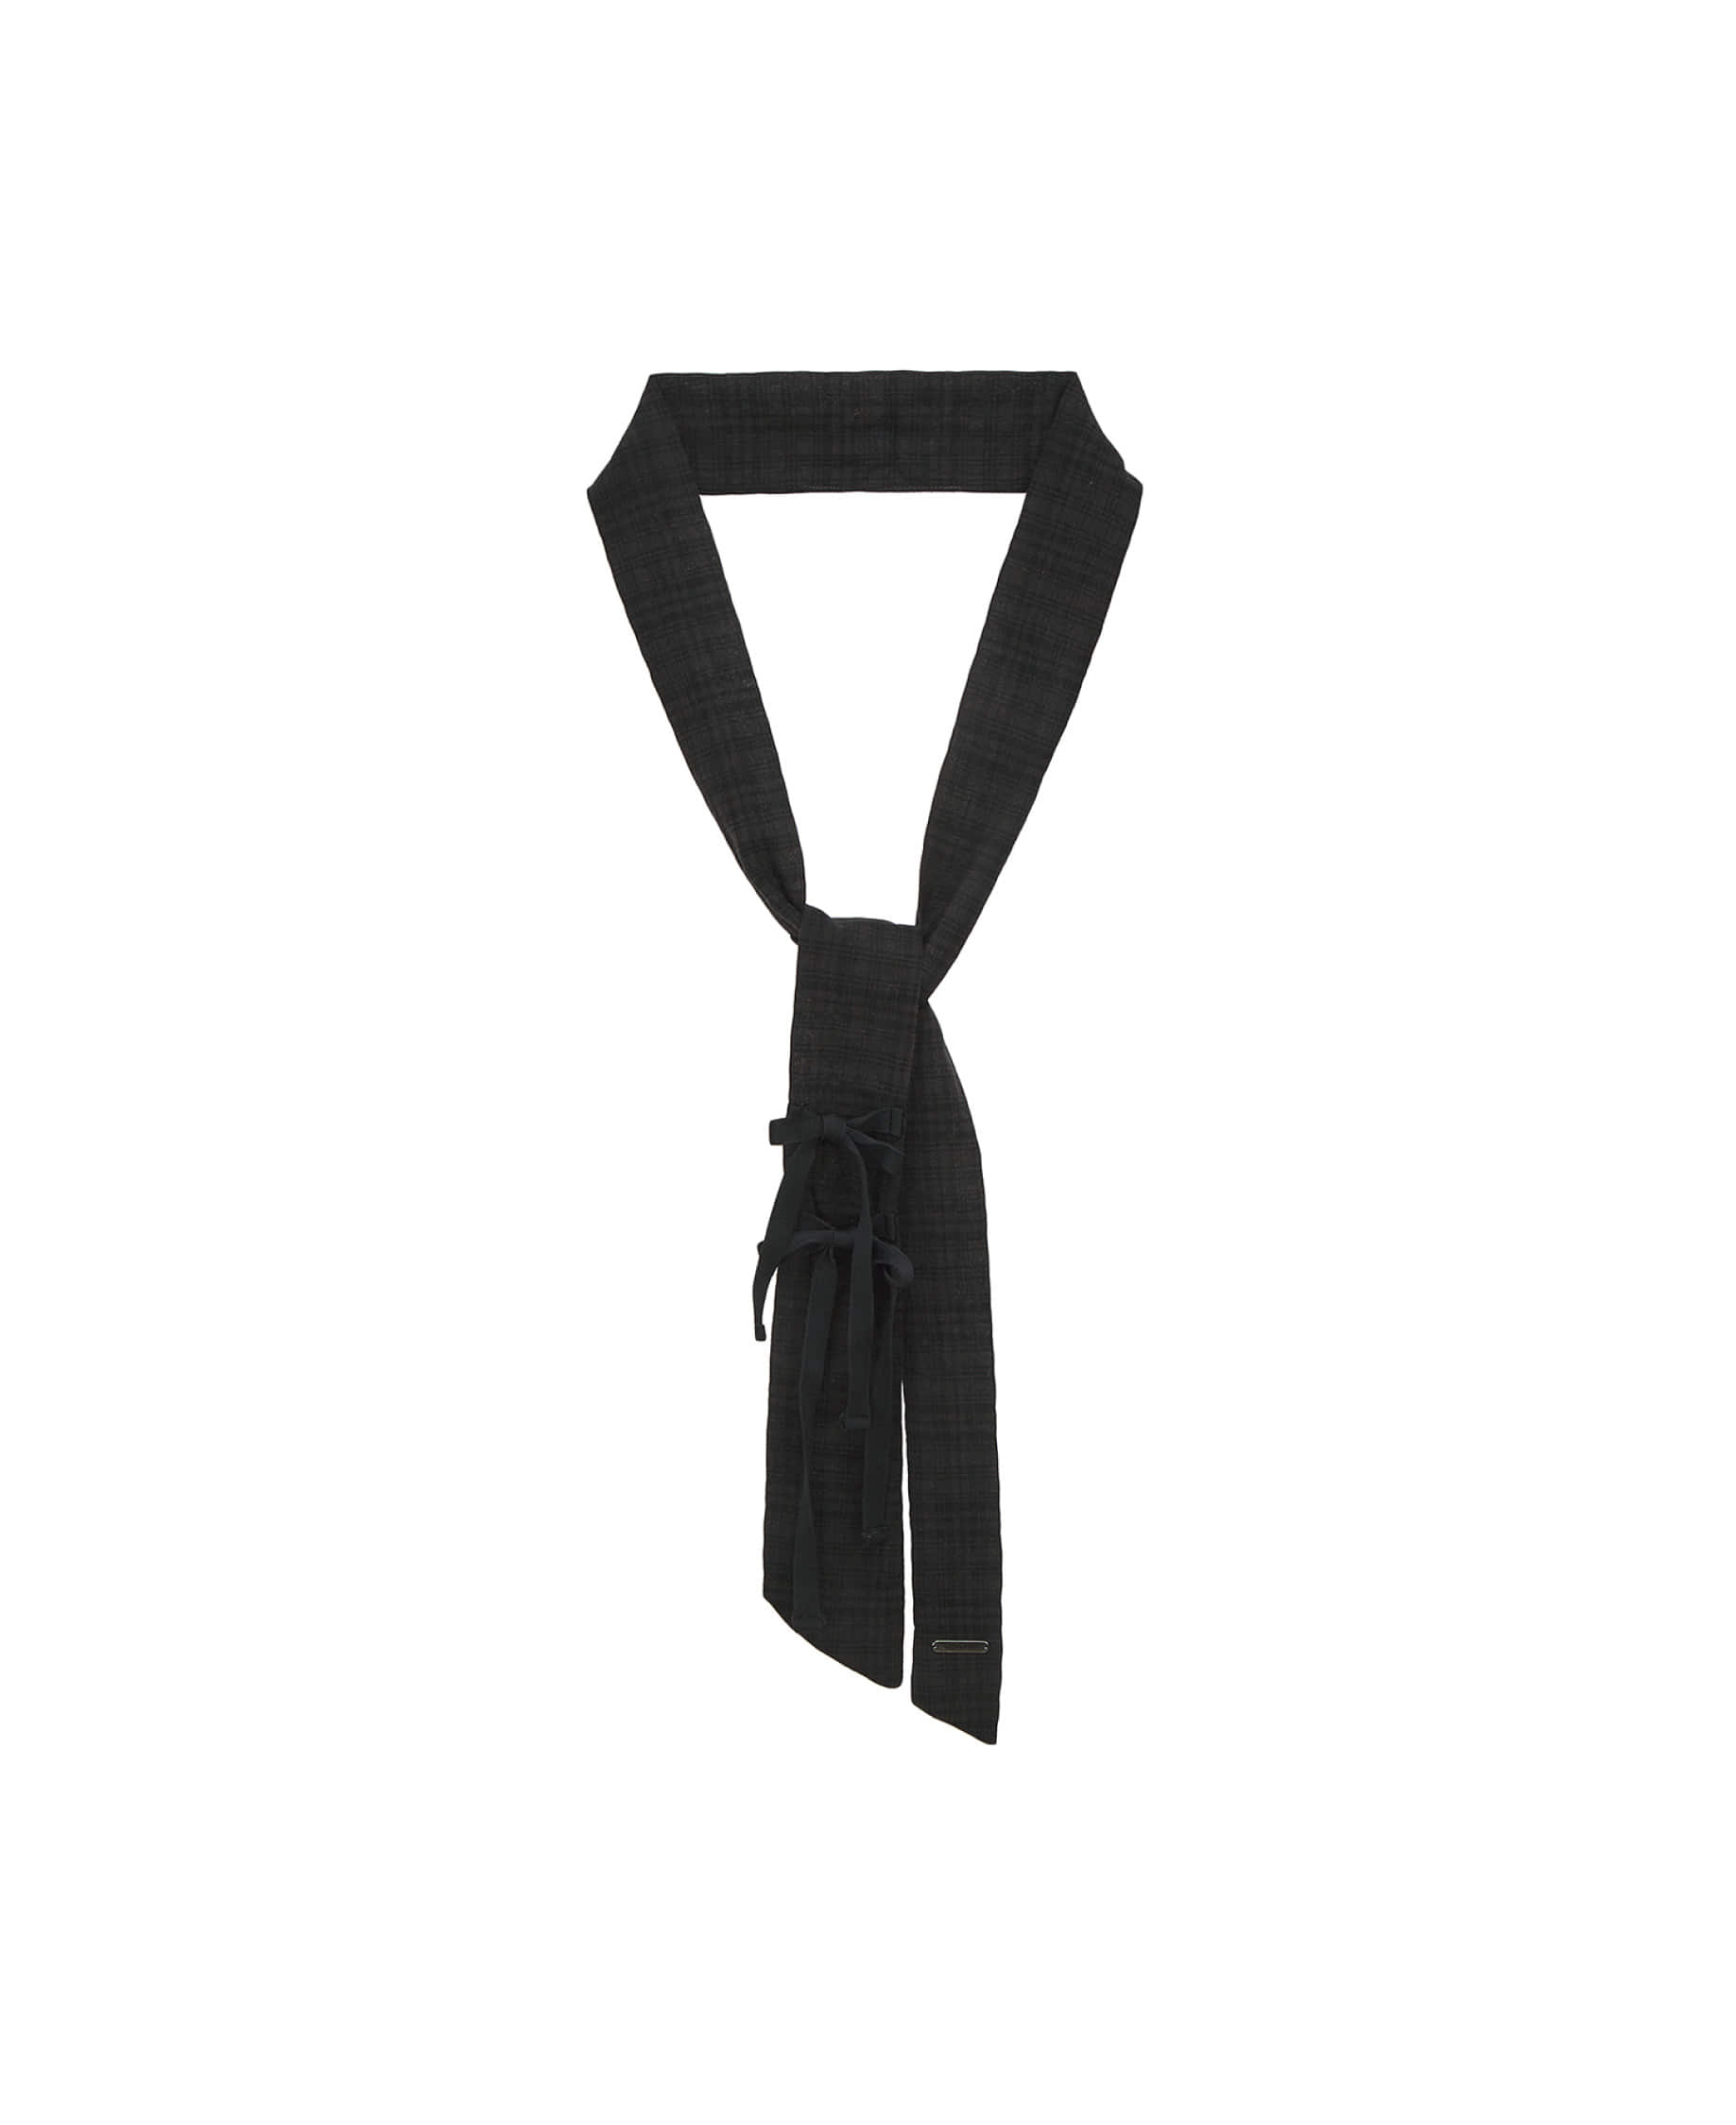 Ribbon check tie (black)